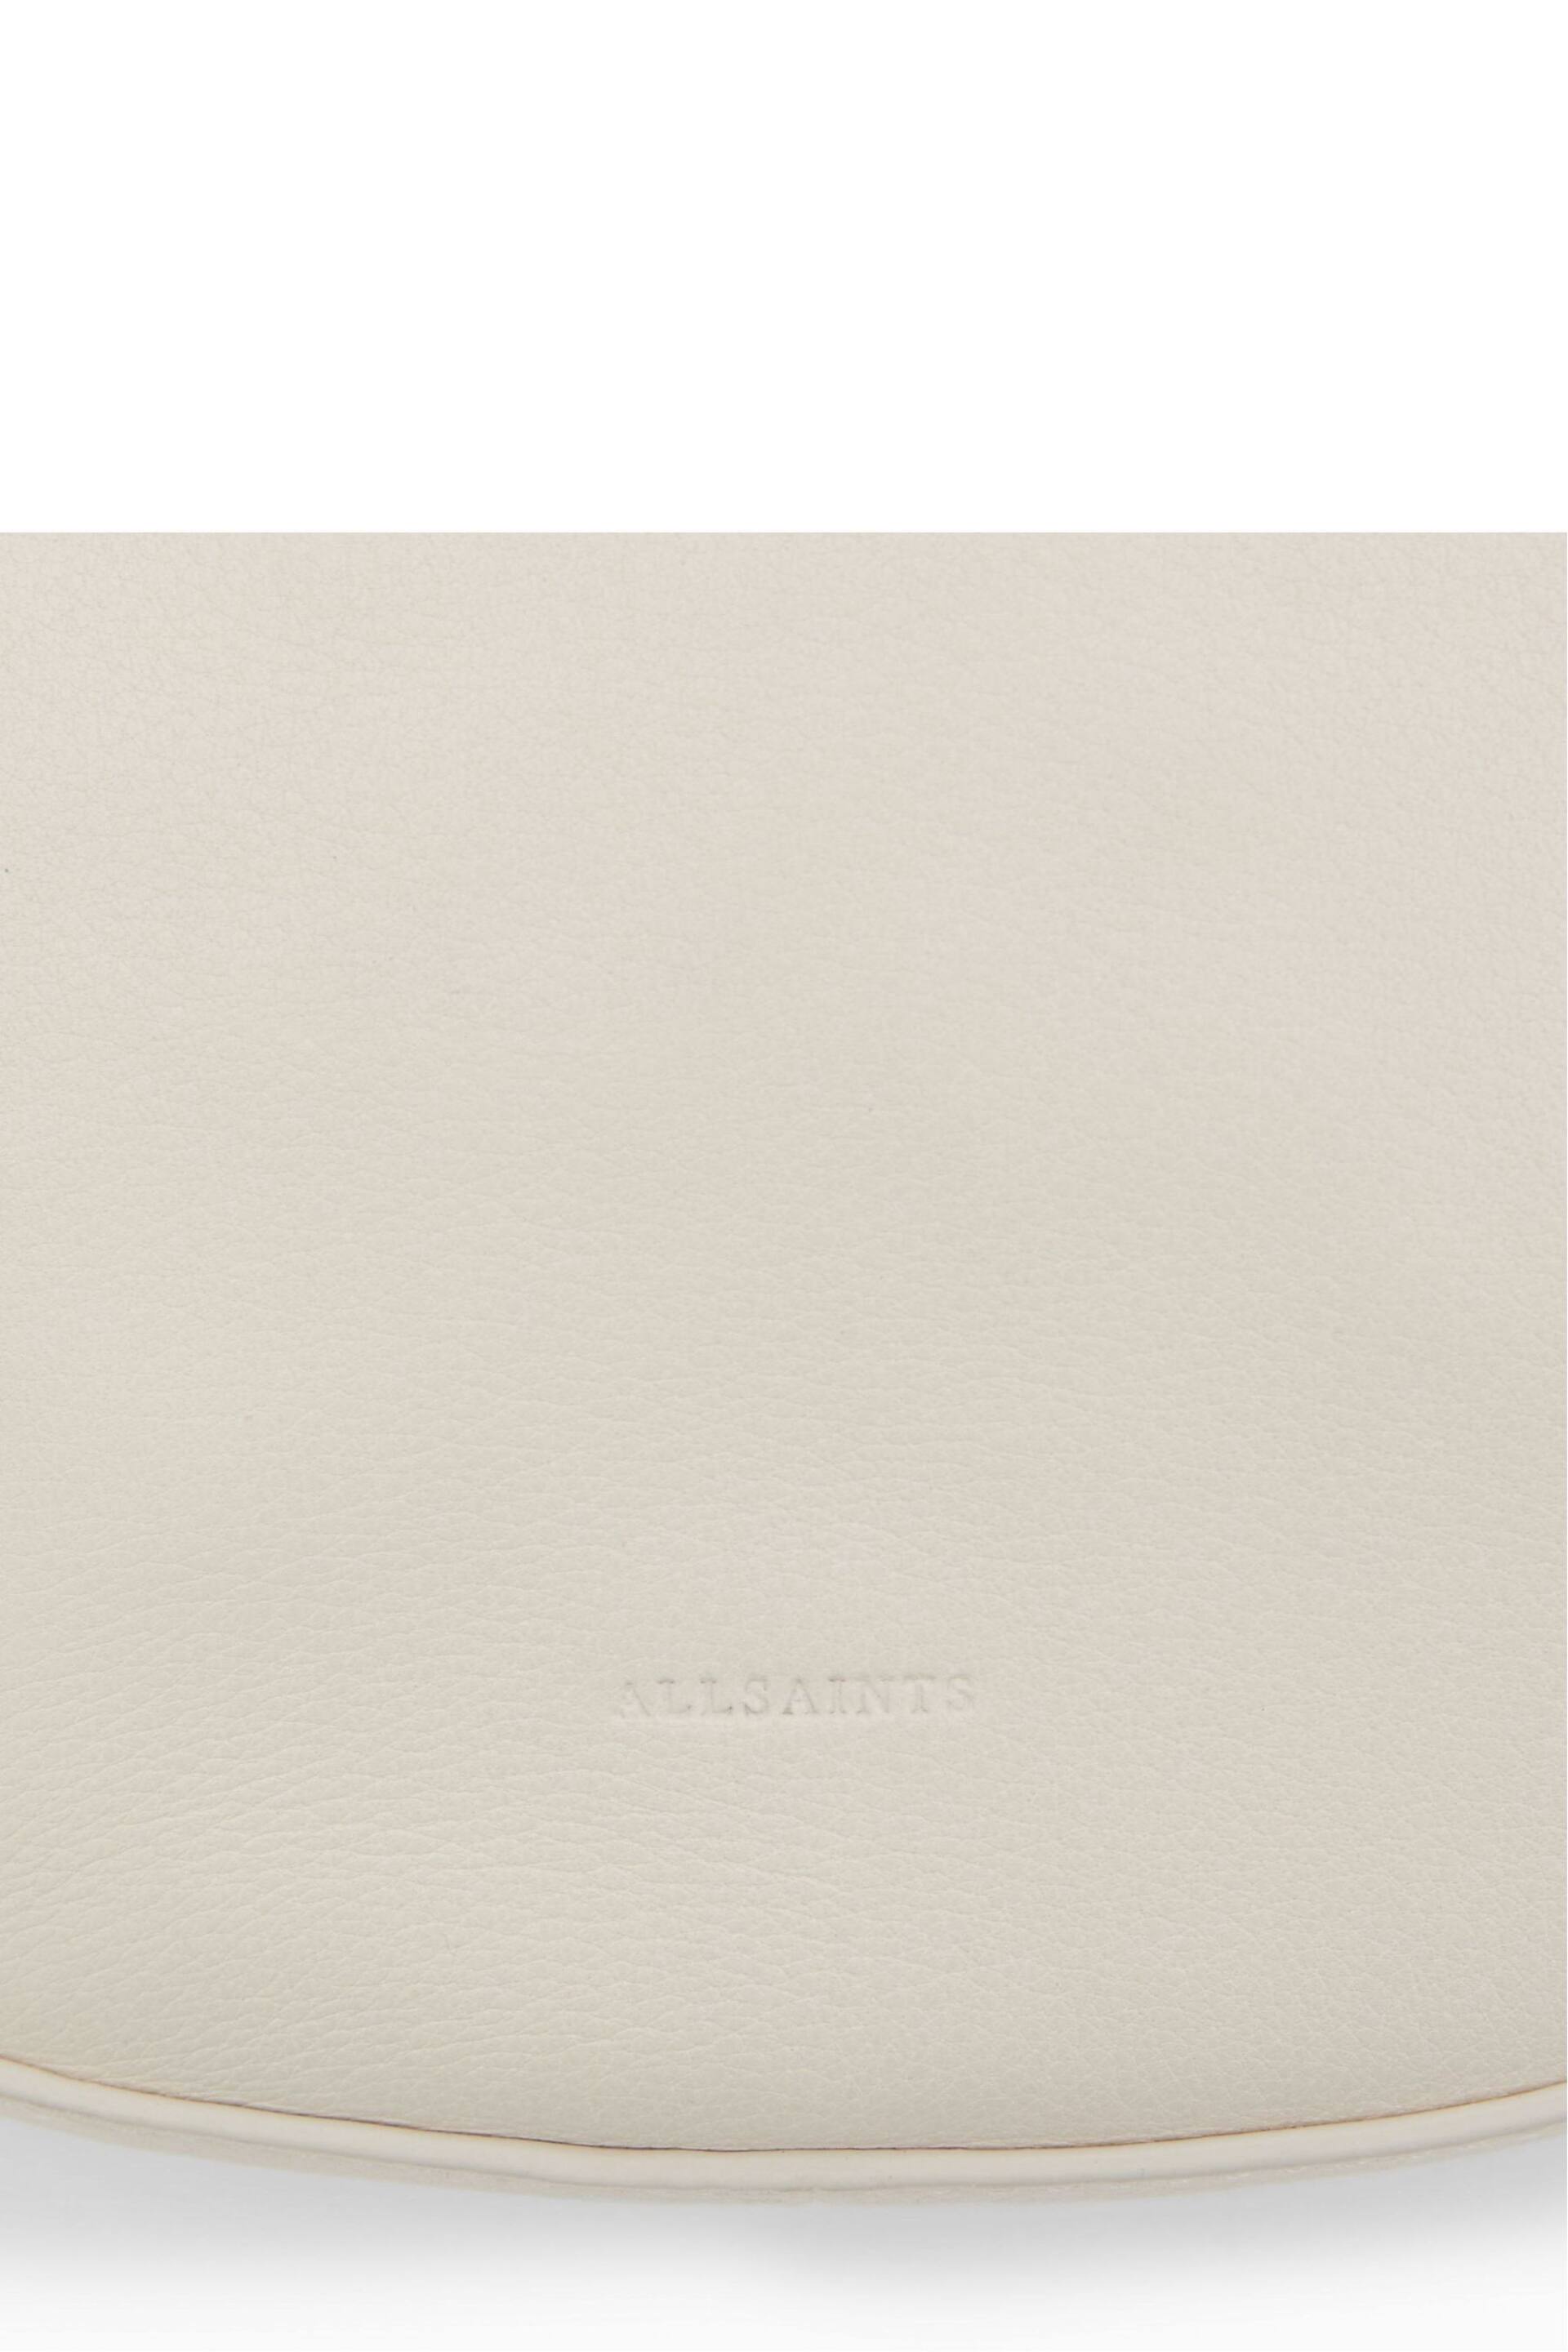 AllSaints White Half Moon Cross-Body Bag - Image 6 of 7